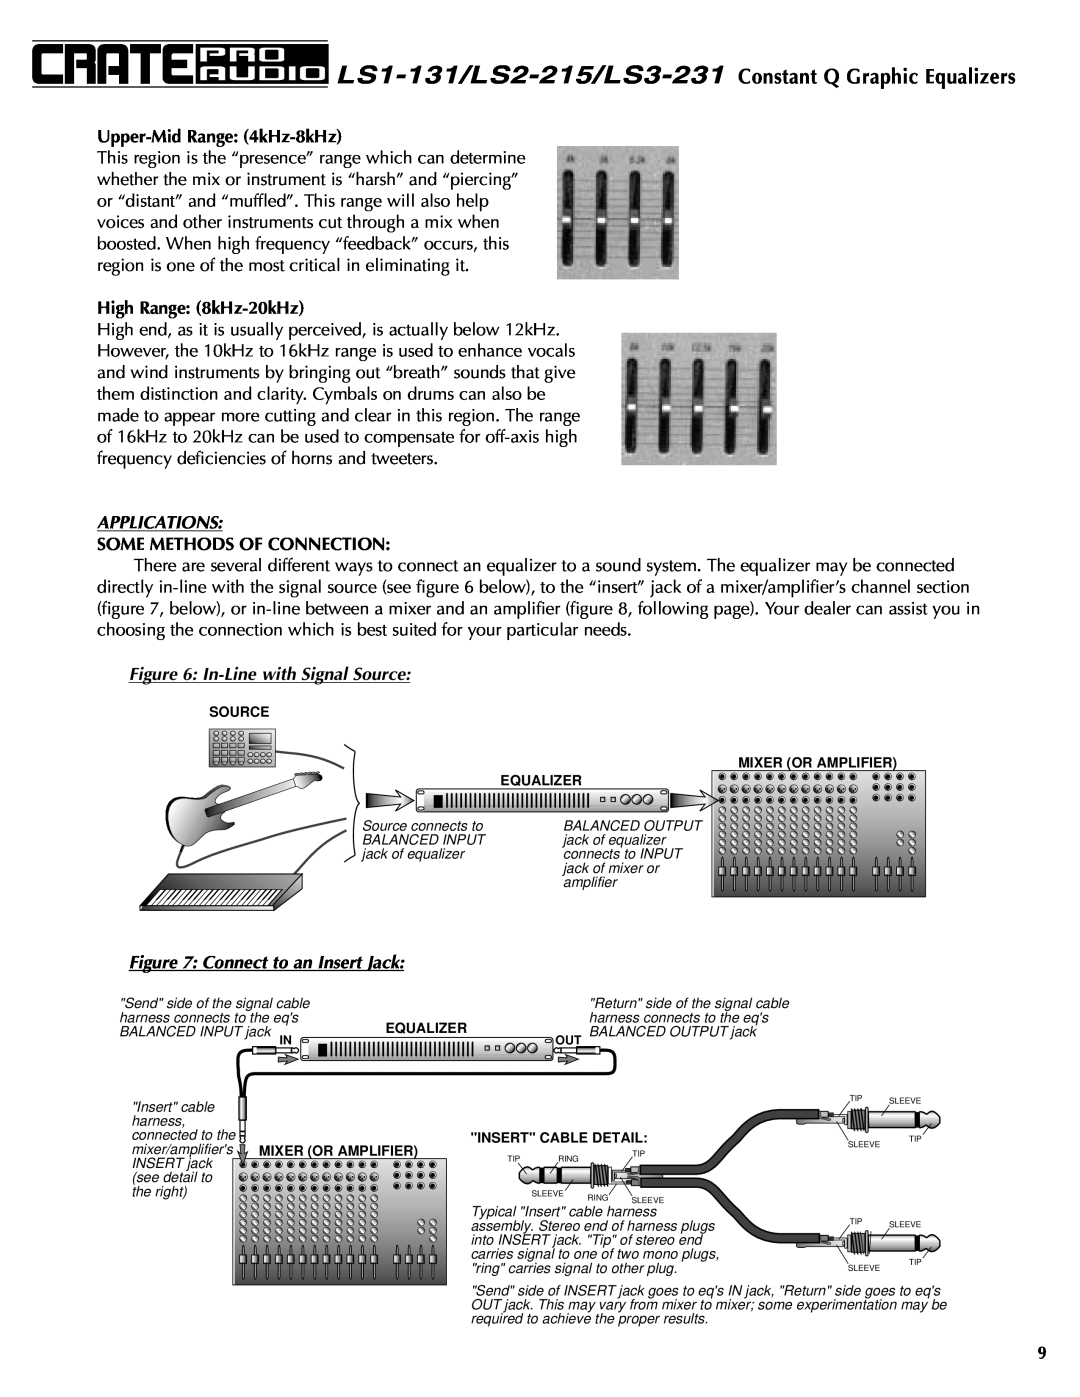 Crate Amplifiers LS3-231 manual Upper-MidRange 4kHz-8kHz, High Range 8kHz-20kHz, Applications, Some Methods Of Connection 